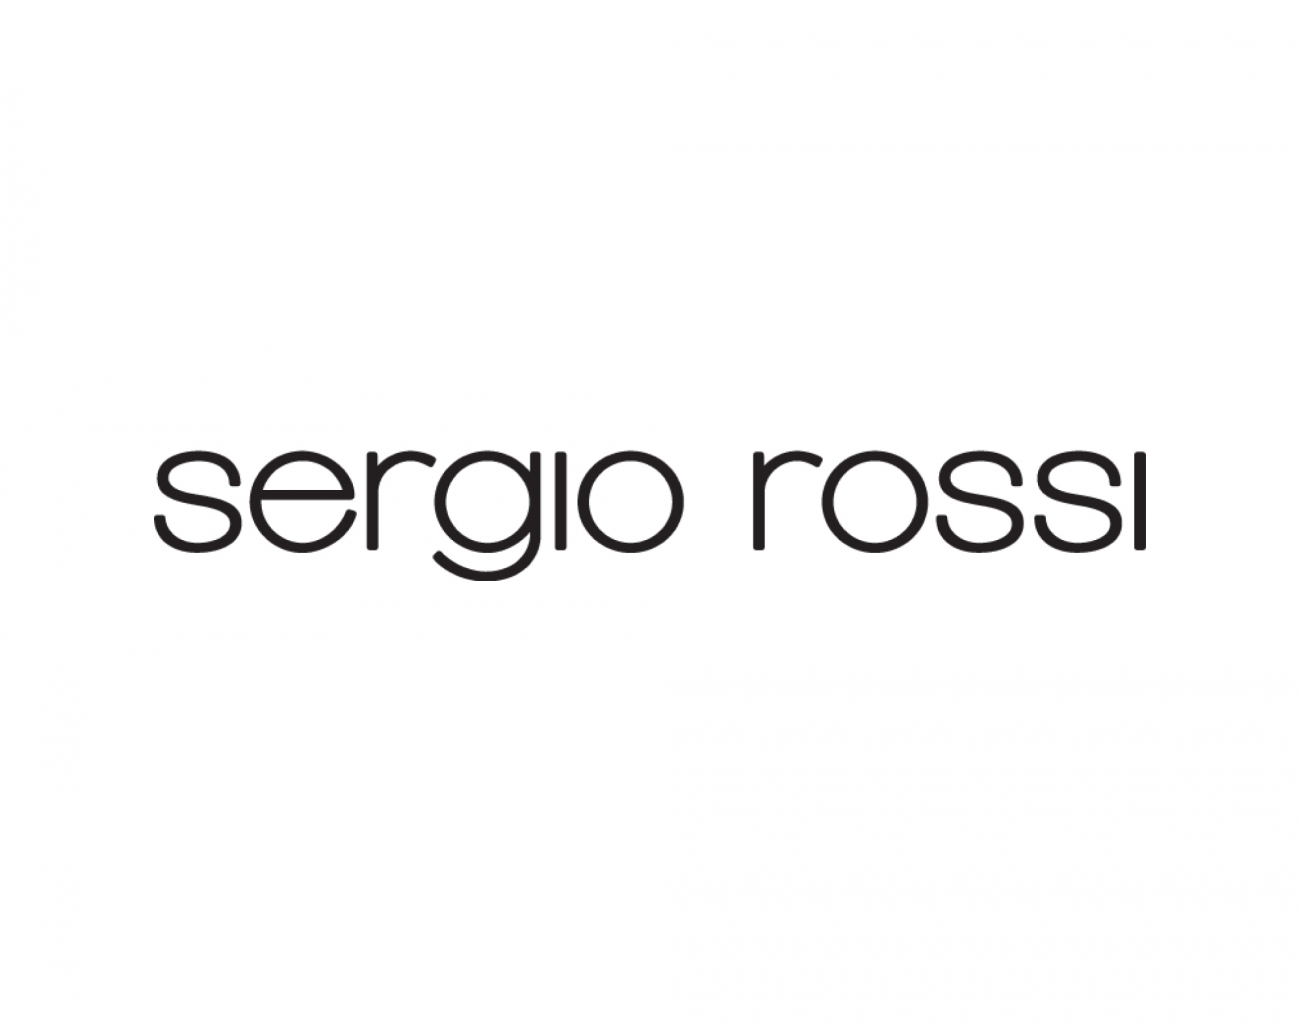 sergio_rossi_logo